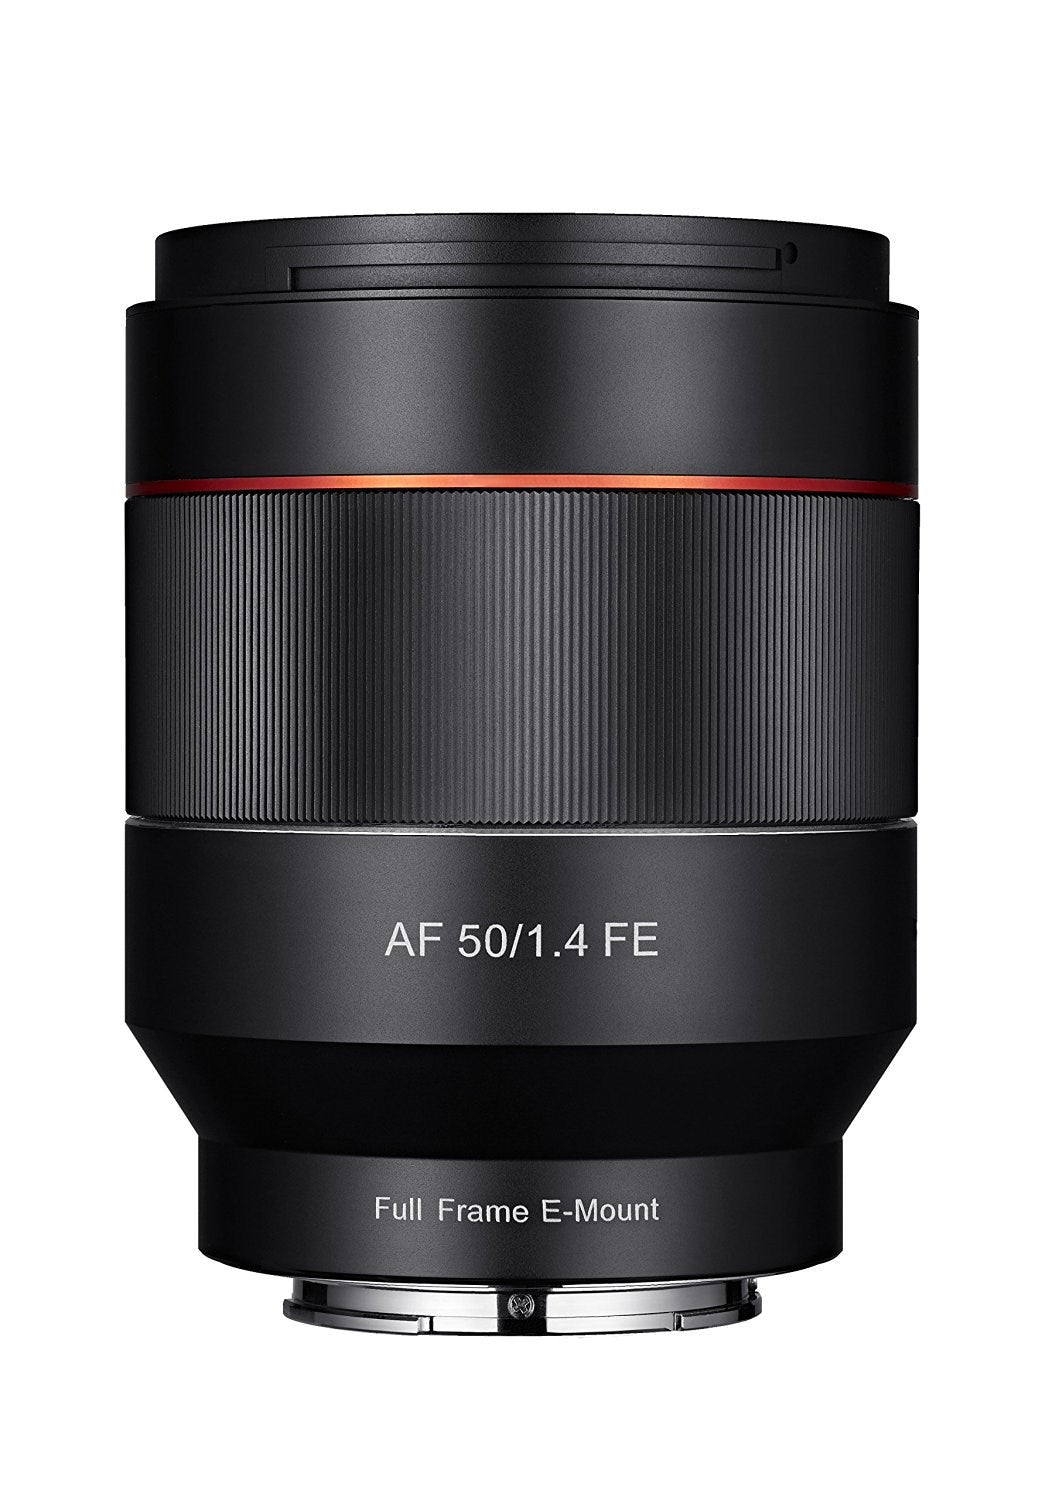 Product Image of Samyang AF 50mm F1.4 Auto Focus Lens for Sony FE Mount